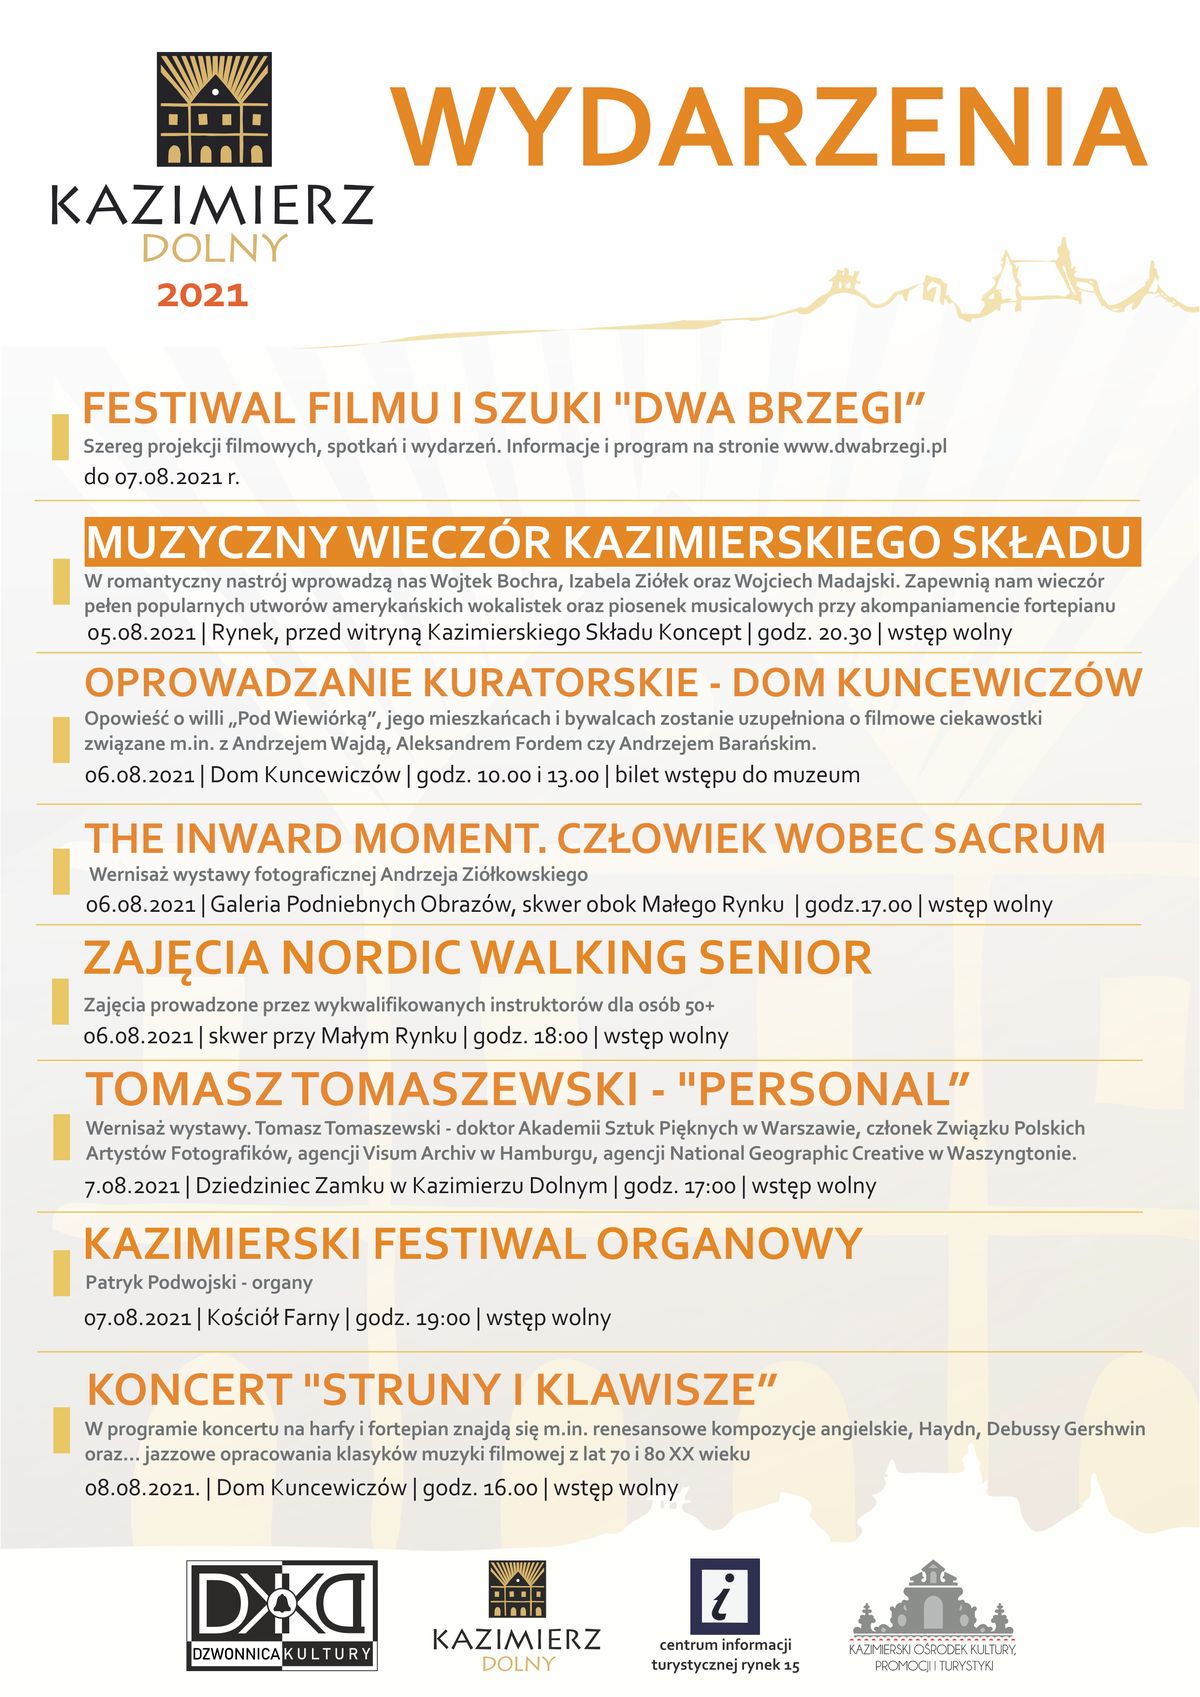 Weekend w Kazimierzu Dolnym: Festiwal Dwa Brzegi, wystawy i festiwal organowy